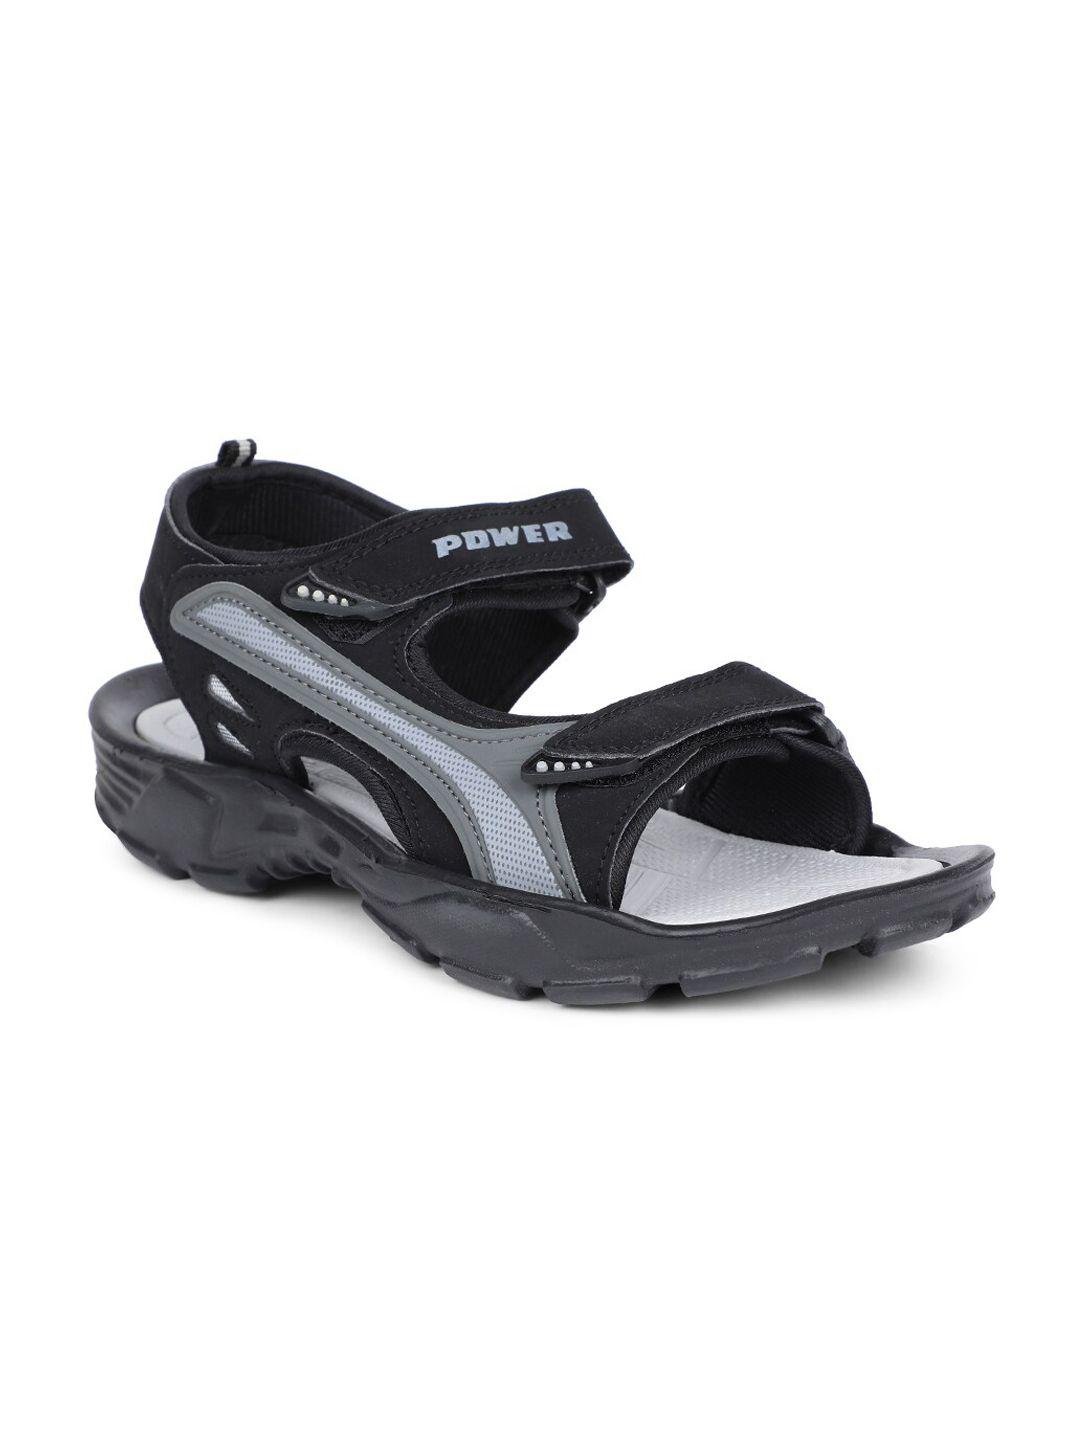 Power Men Black & Grey Patterned Sports Sandals